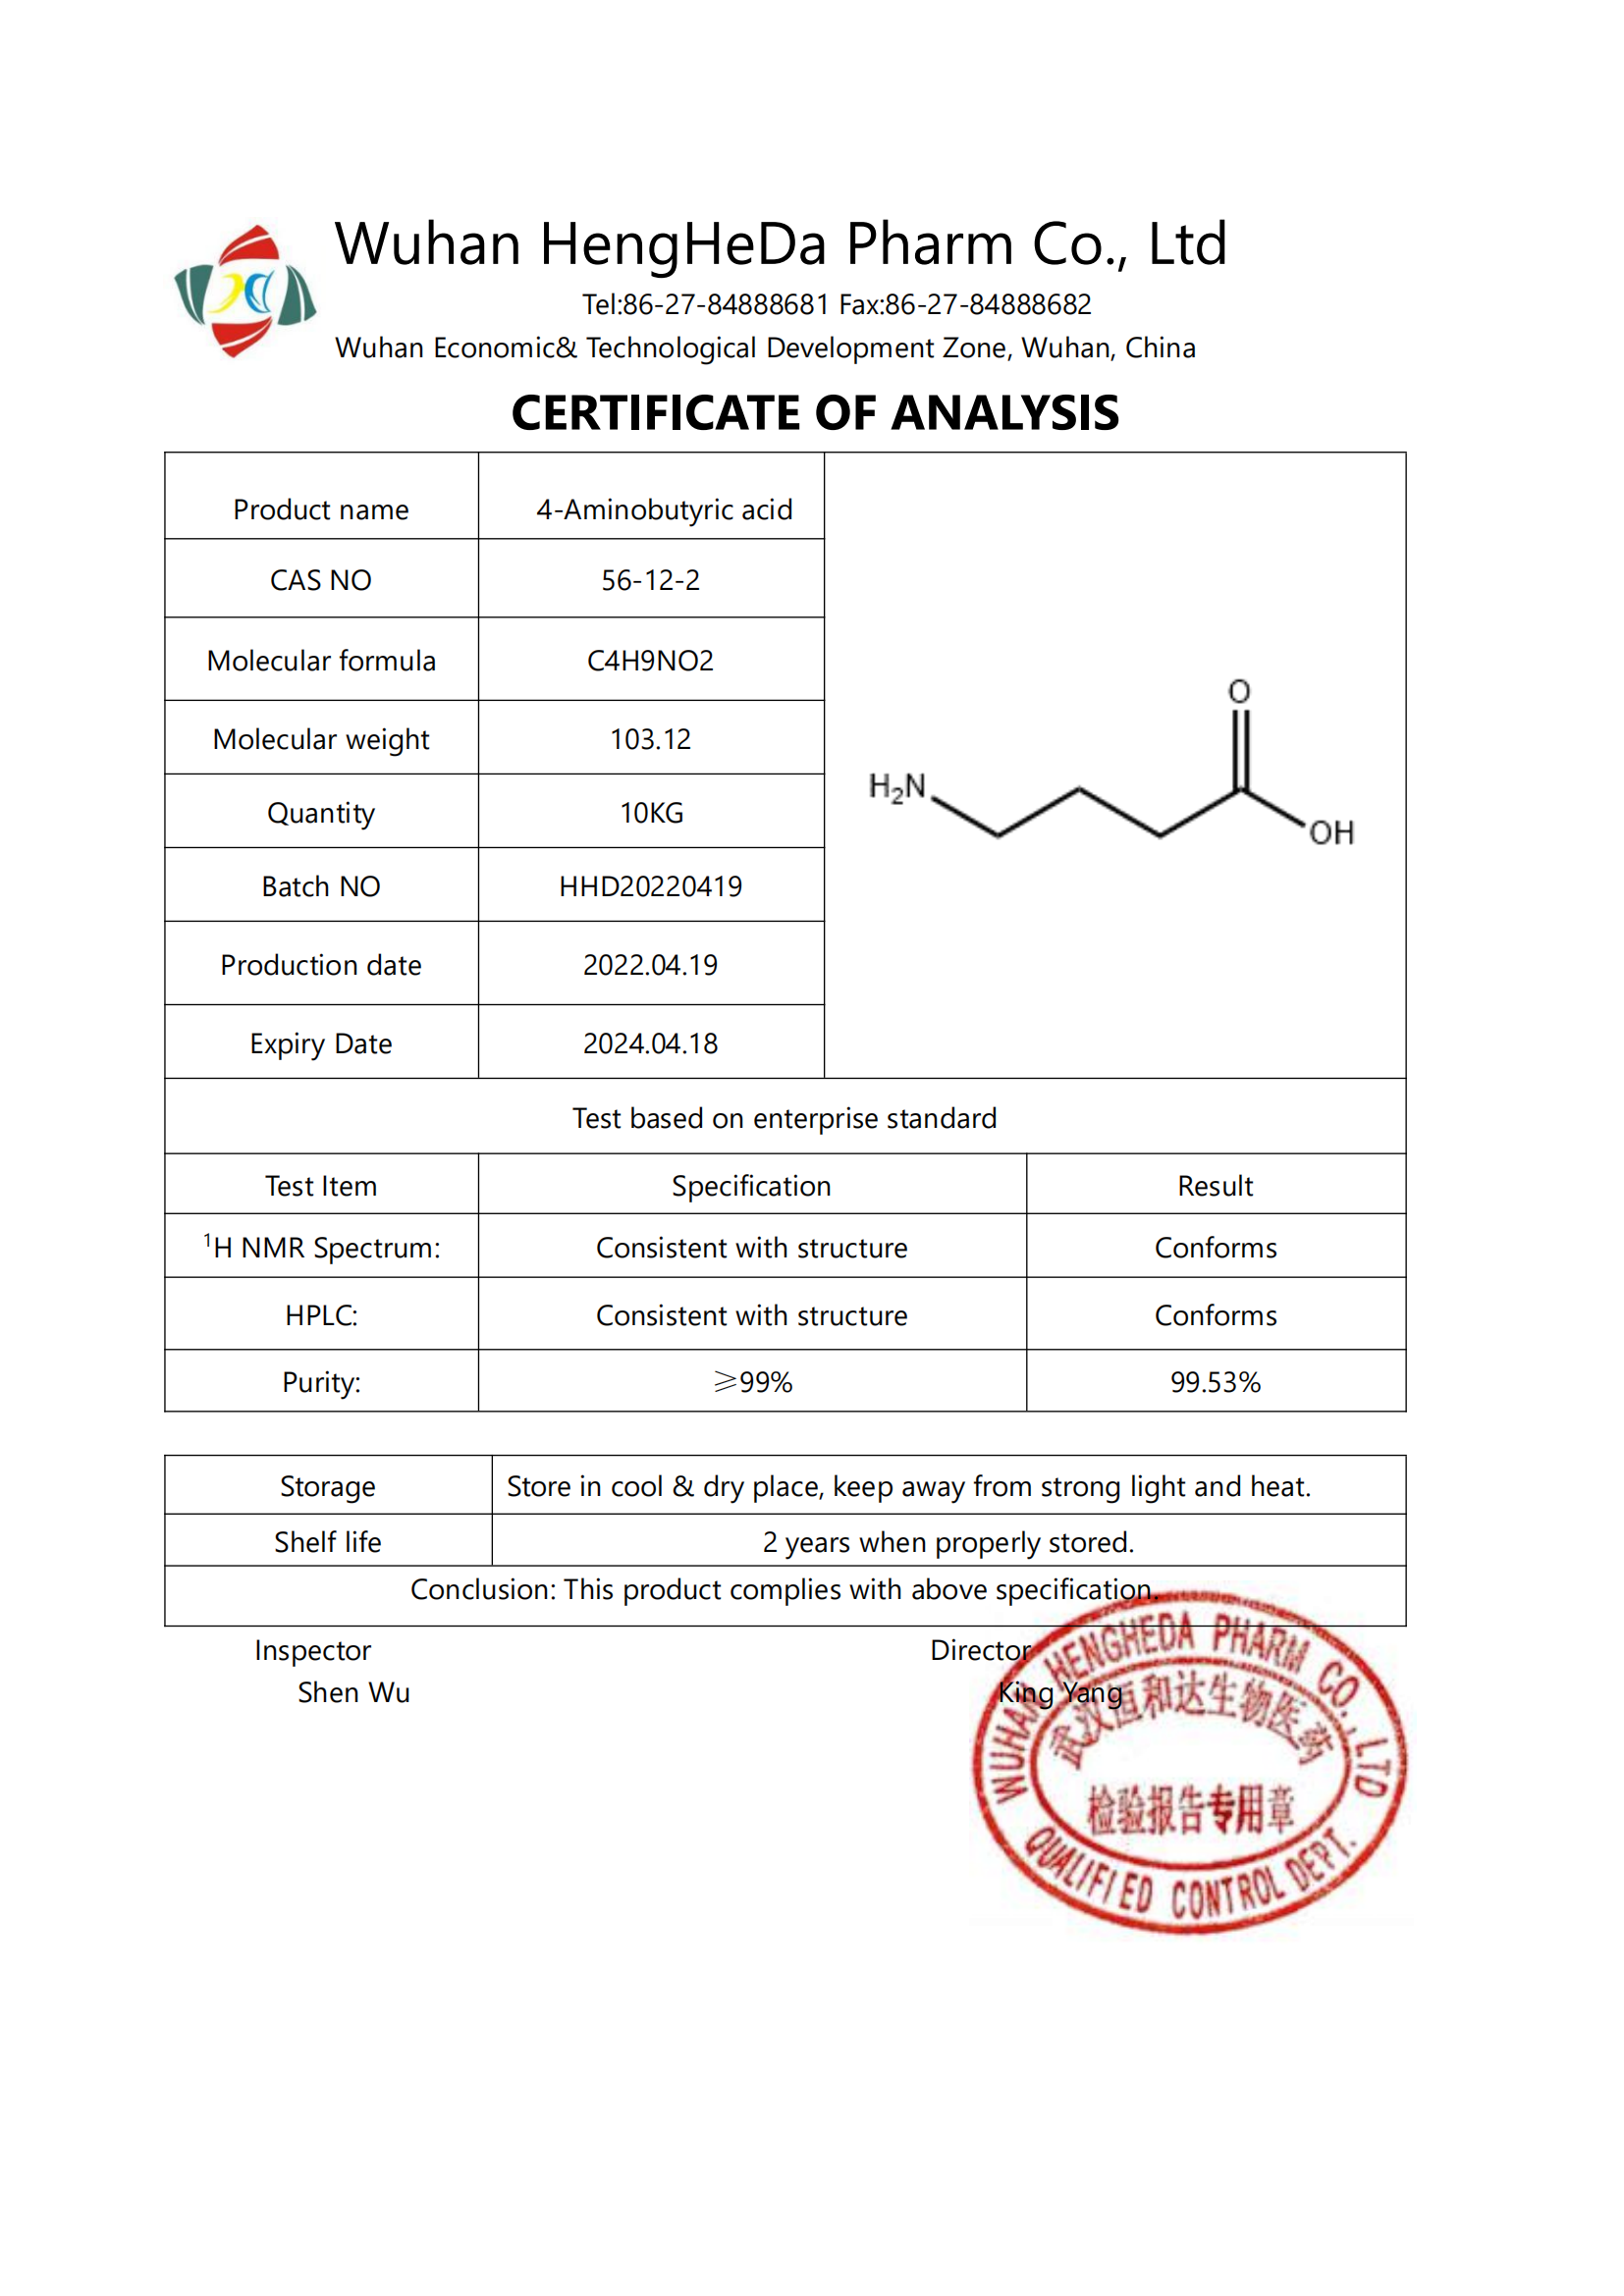 Comprar Ácido 4-aminobutírico de alta calidad CAS 56-12-2, Ácido 4-aminobutírico de alta calidad CAS 56-12-2 Precios, Ácido 4-aminobutírico de alta calidad CAS 56-12-2 Marcas, Ácido 4-aminobutírico de alta calidad CAS 56-12-2 Fabricante, Ácido 4-aminobutírico de alta calidad CAS 56-12-2 Citas, Ácido 4-aminobutírico de alta calidad CAS 56-12-2 Empresa.